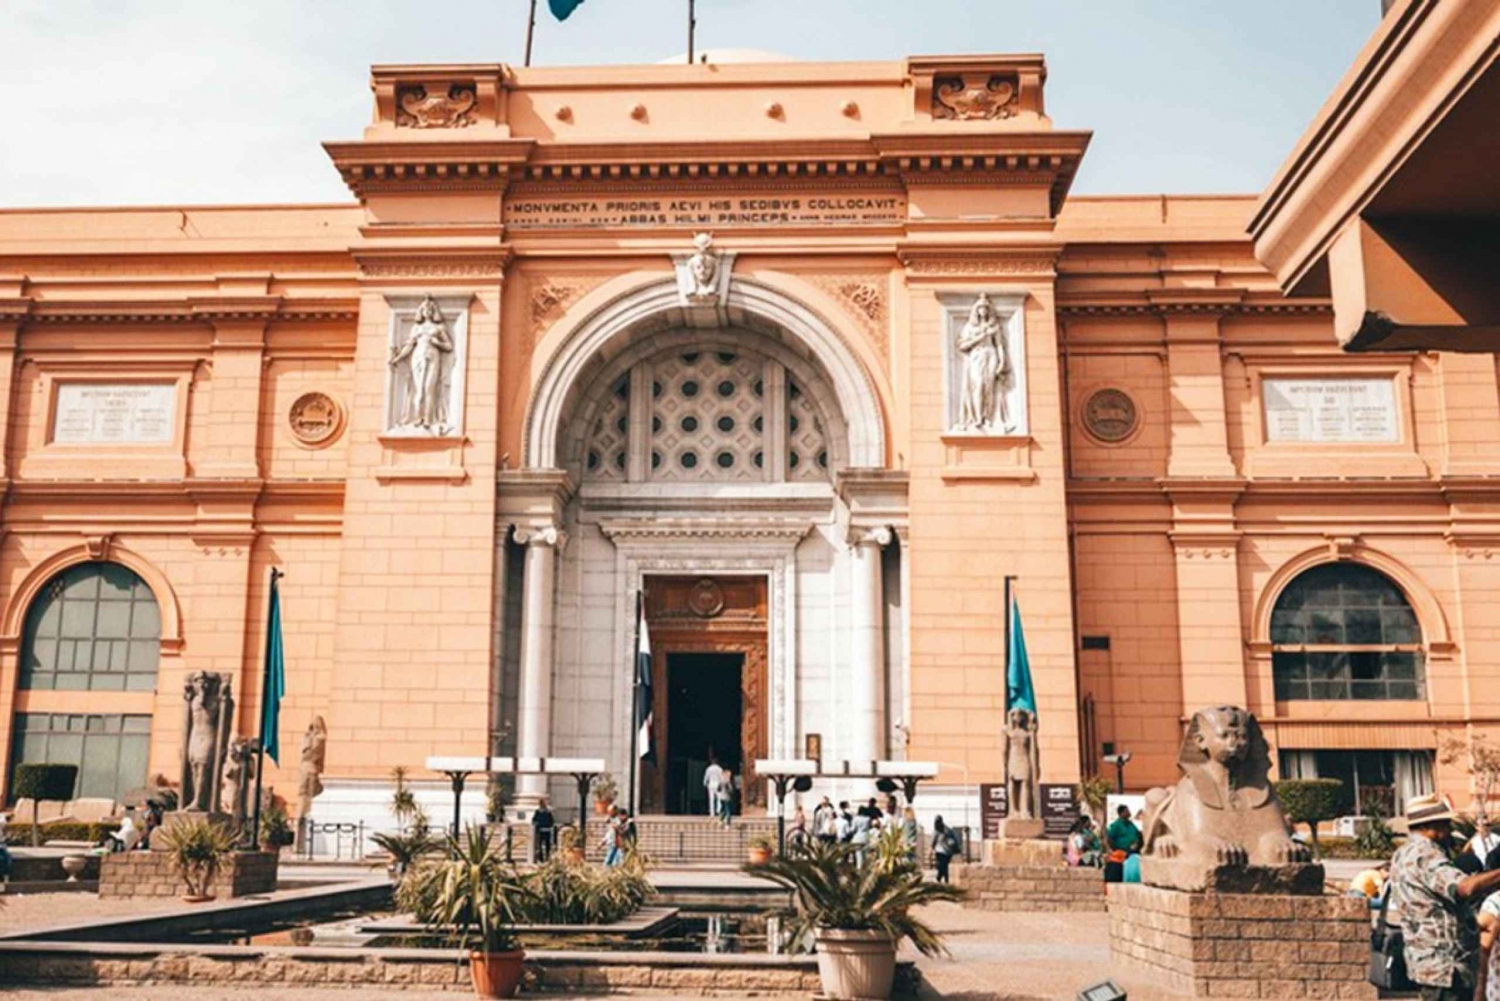 2 Days Tour To Pyramids, Museum and Coptic Cairo